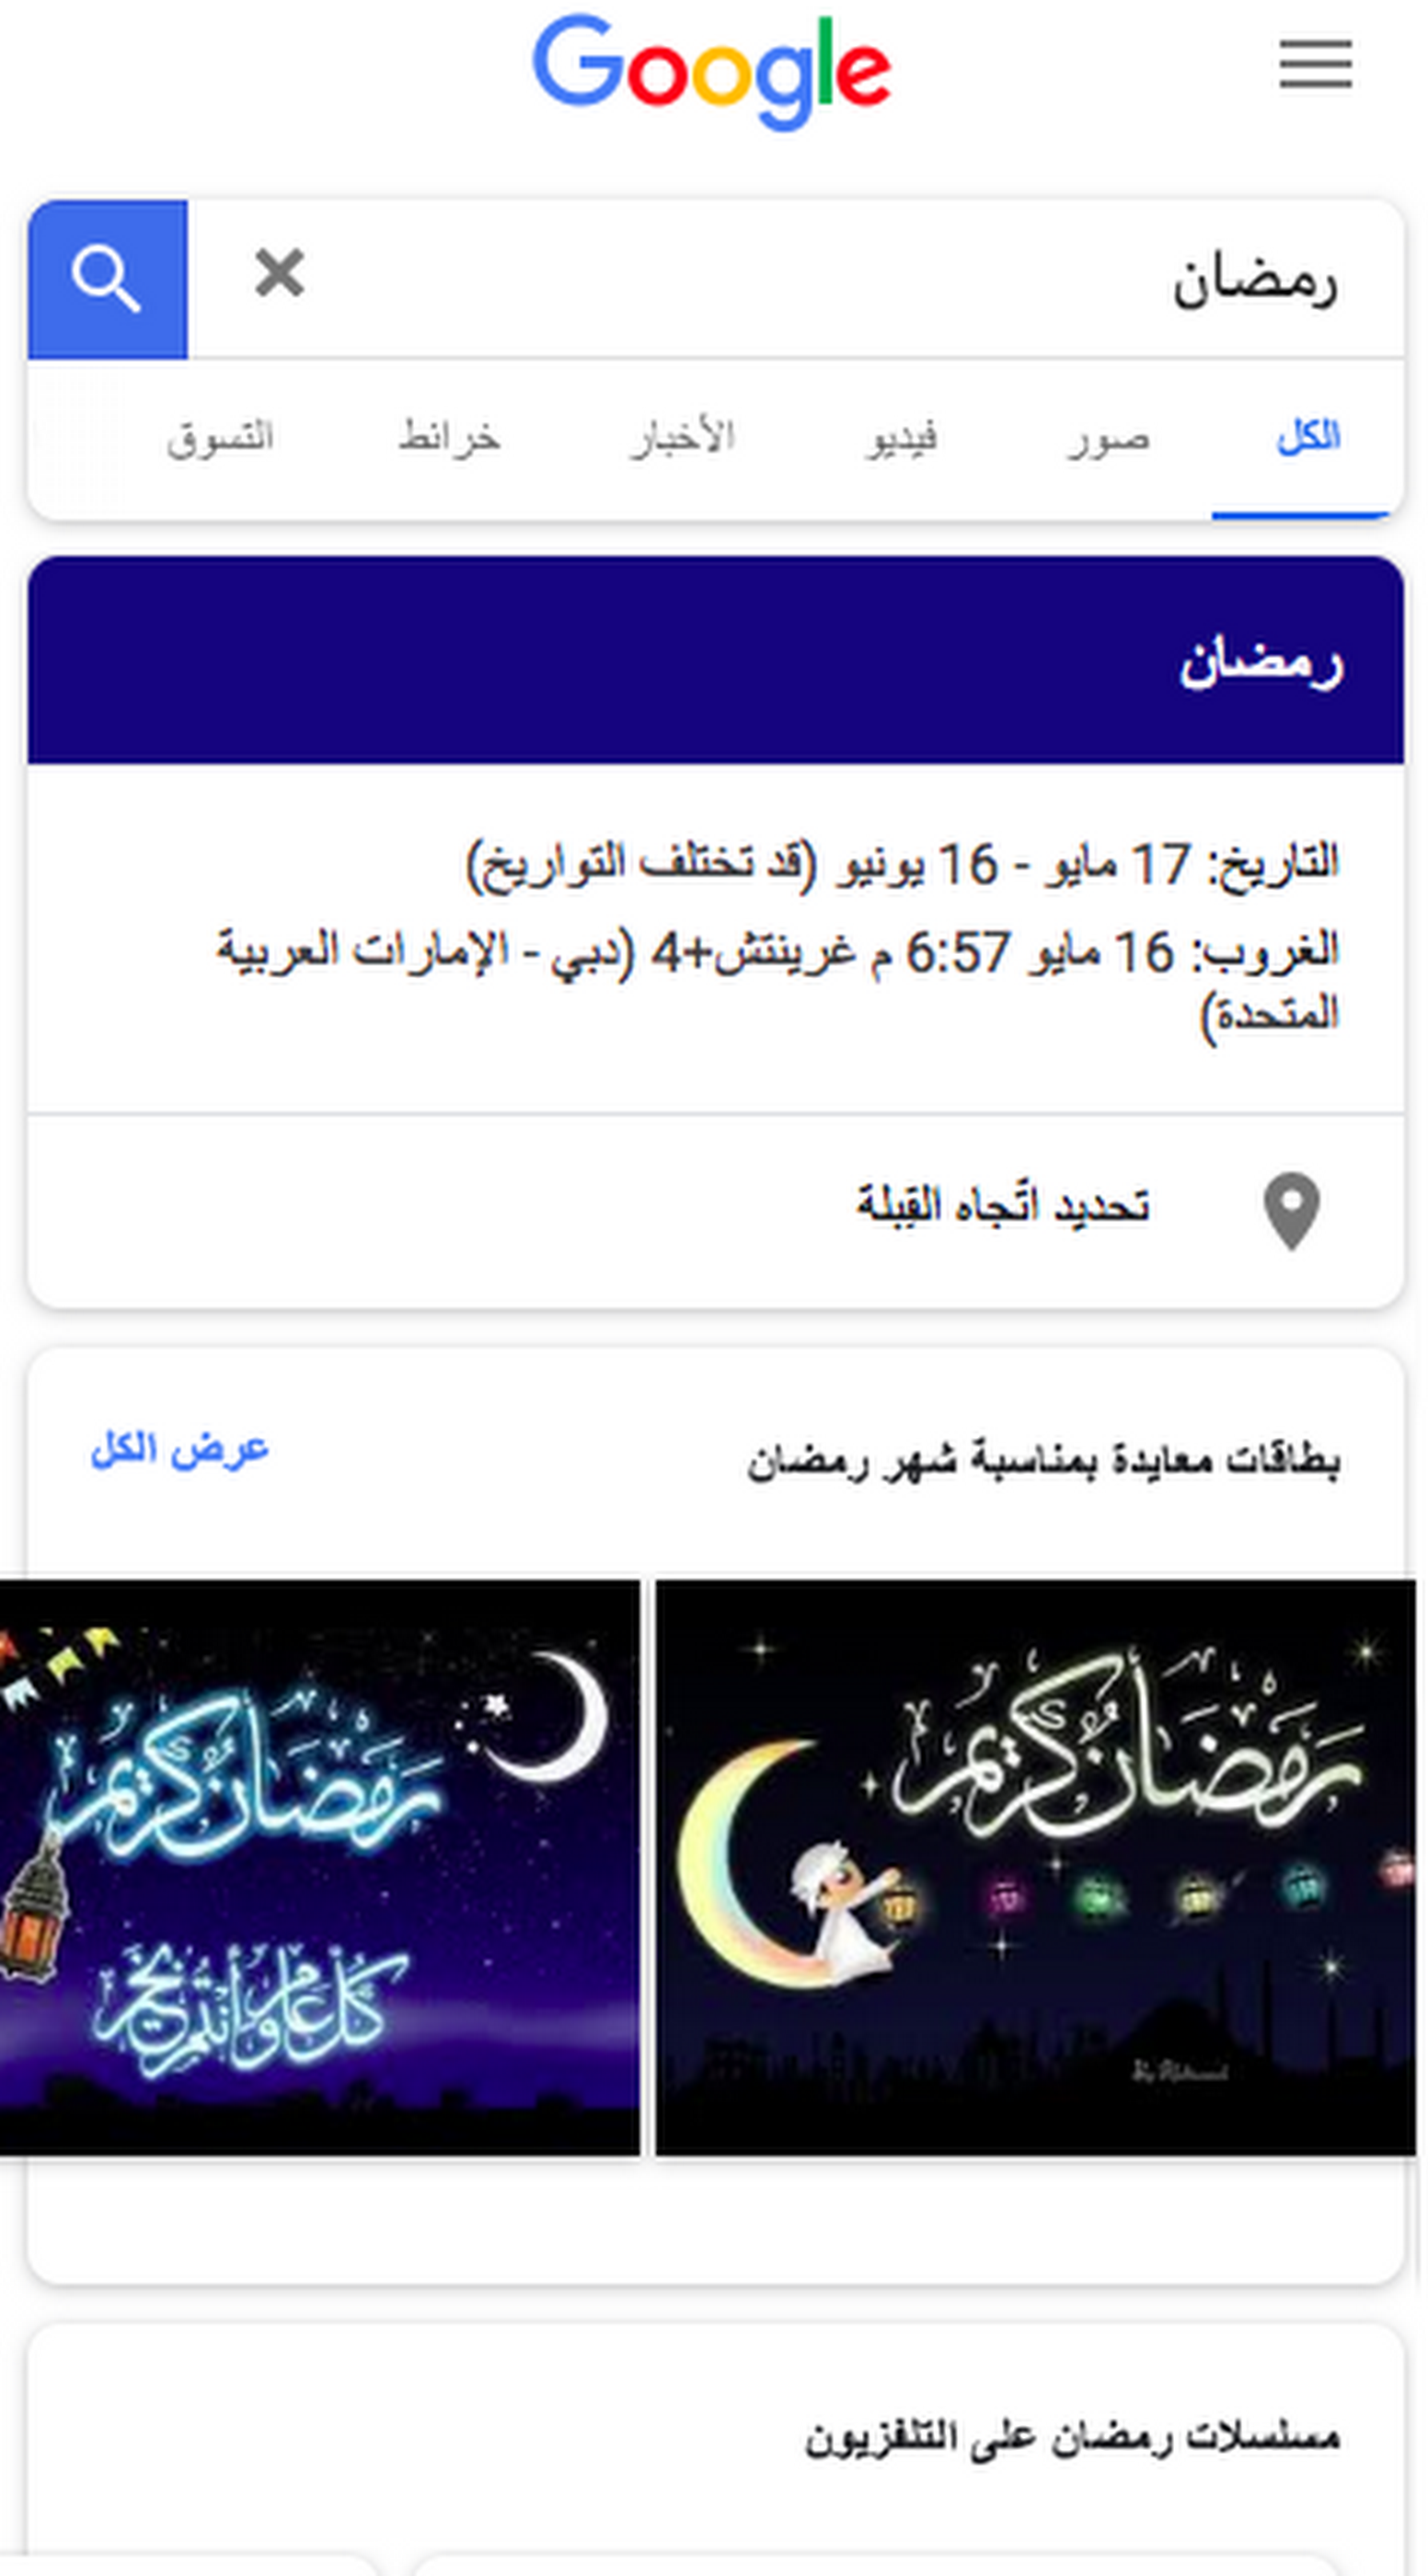 Ramadan Kareem! Get in the Ramadan spirit with Google